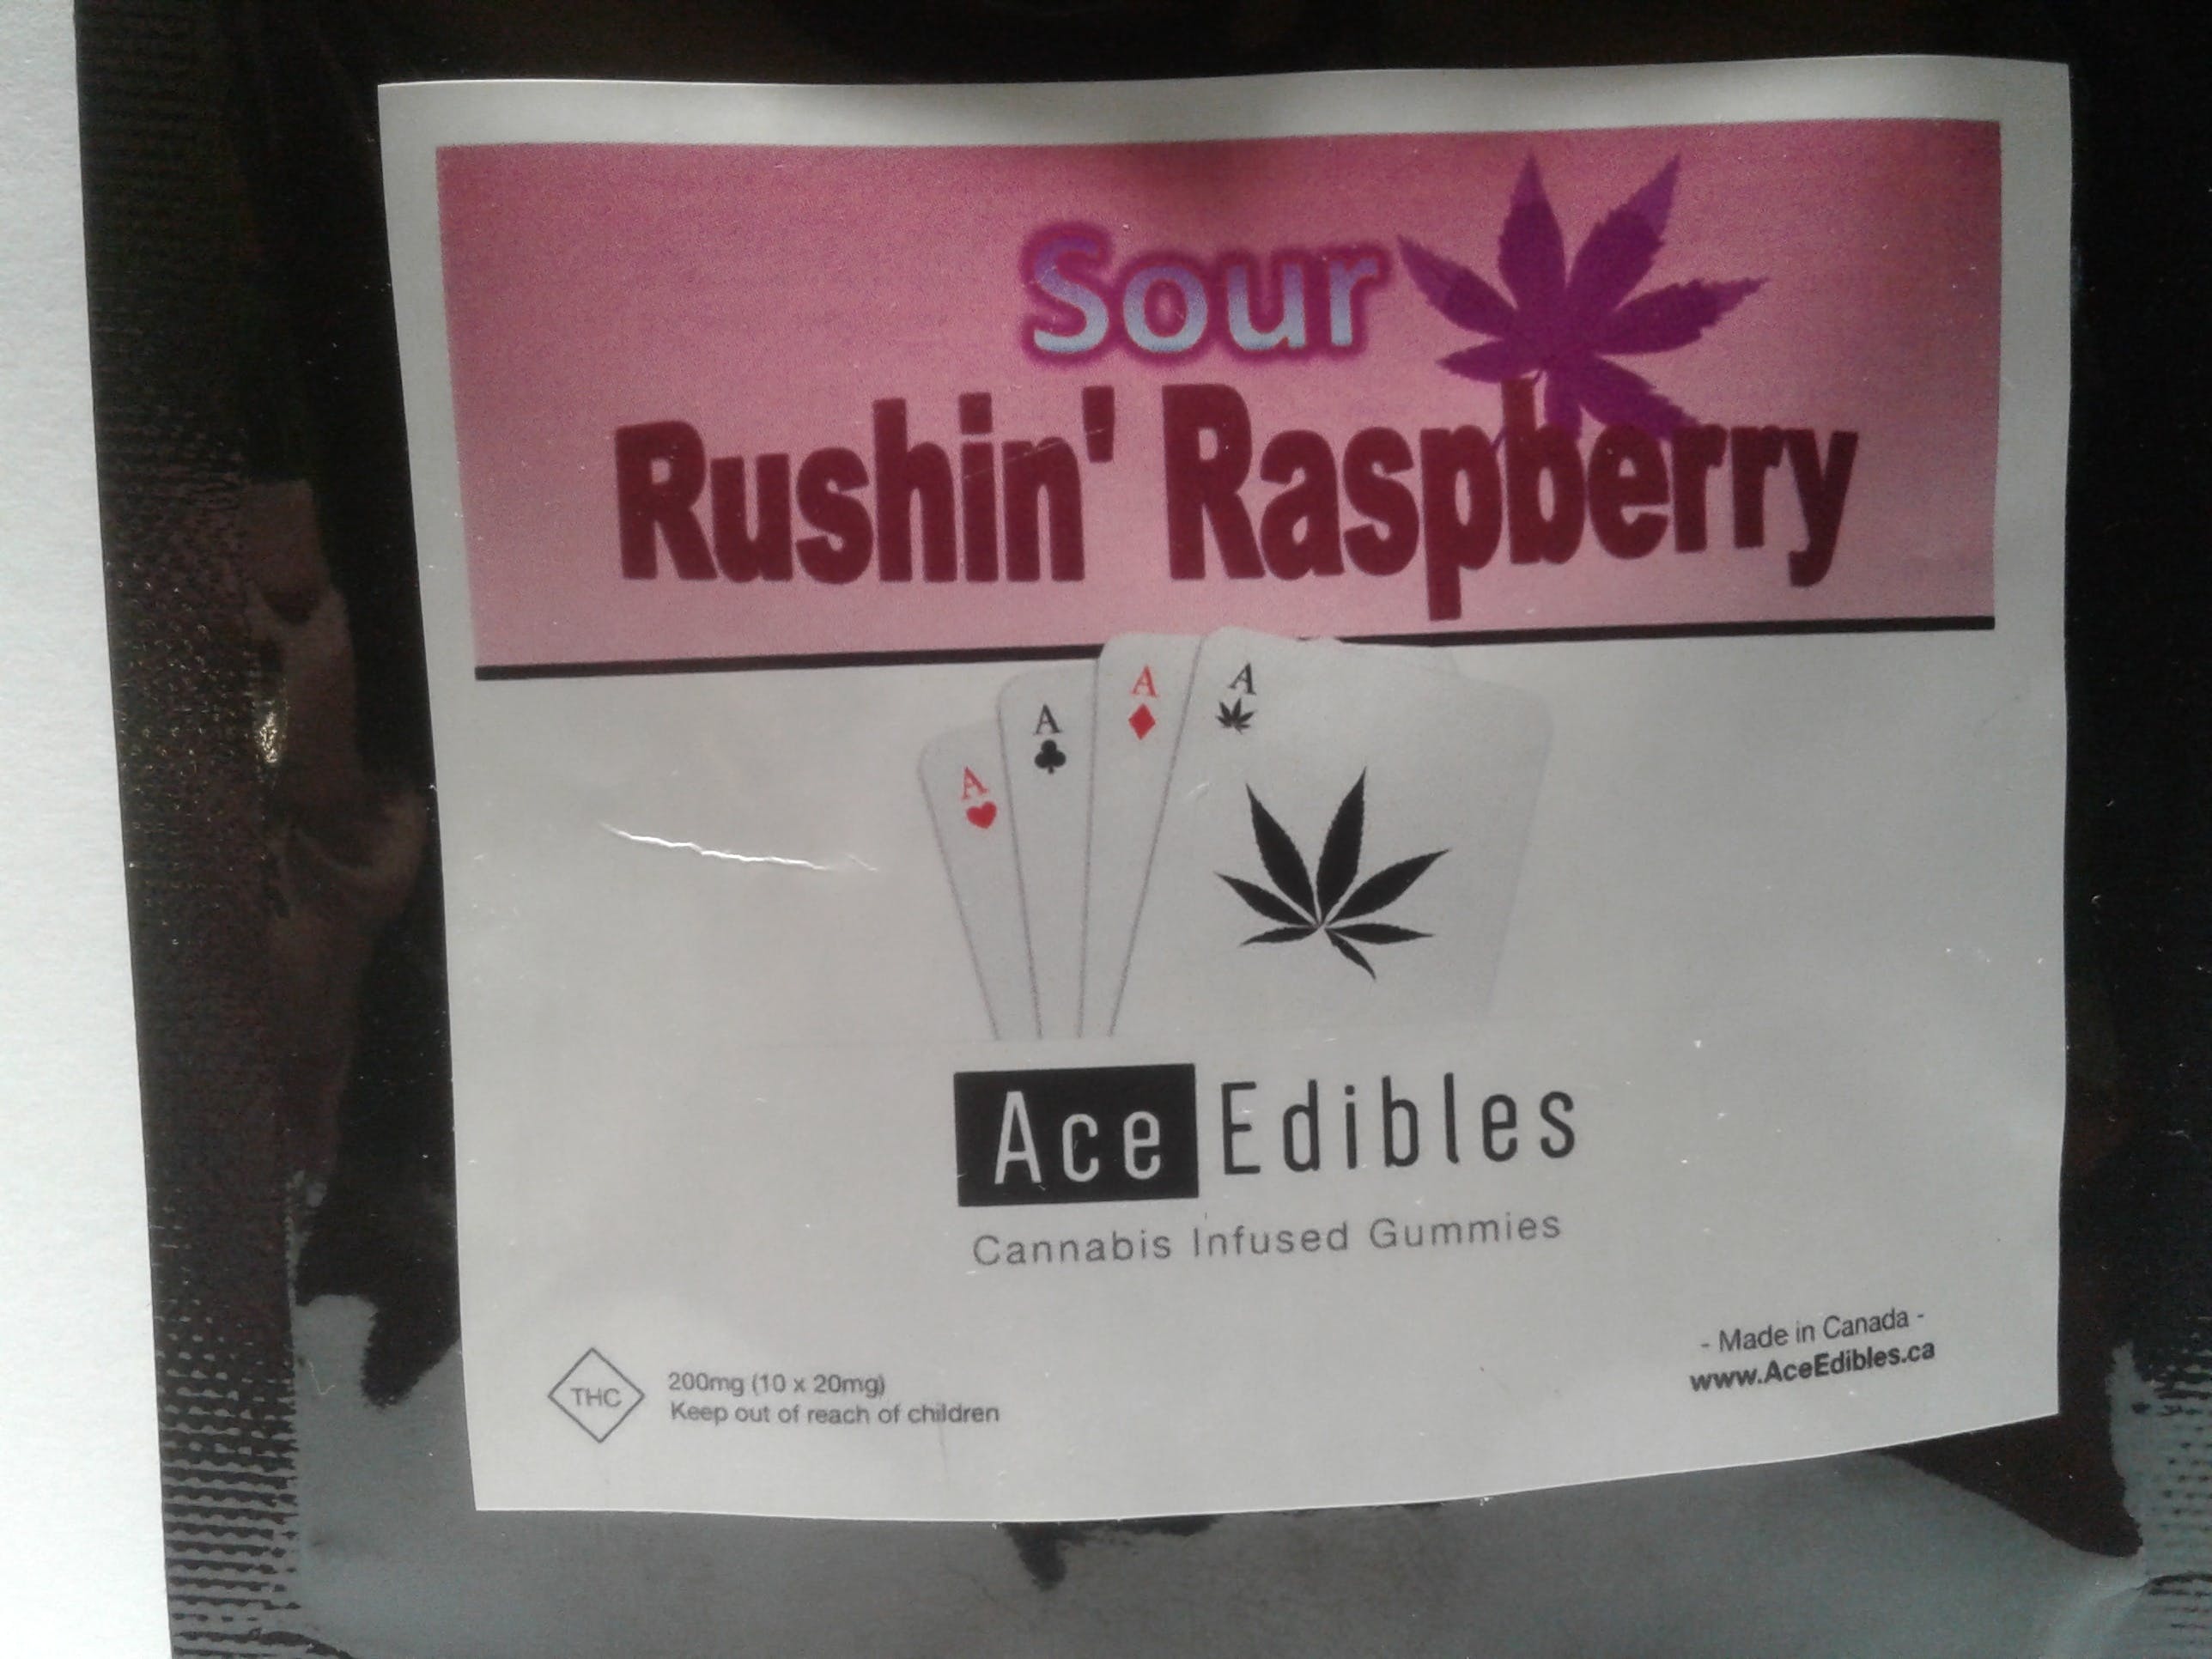 edible-ace-edibles-rushing-raspberry-sour-line-ace-edibles-10-20mg-pieces